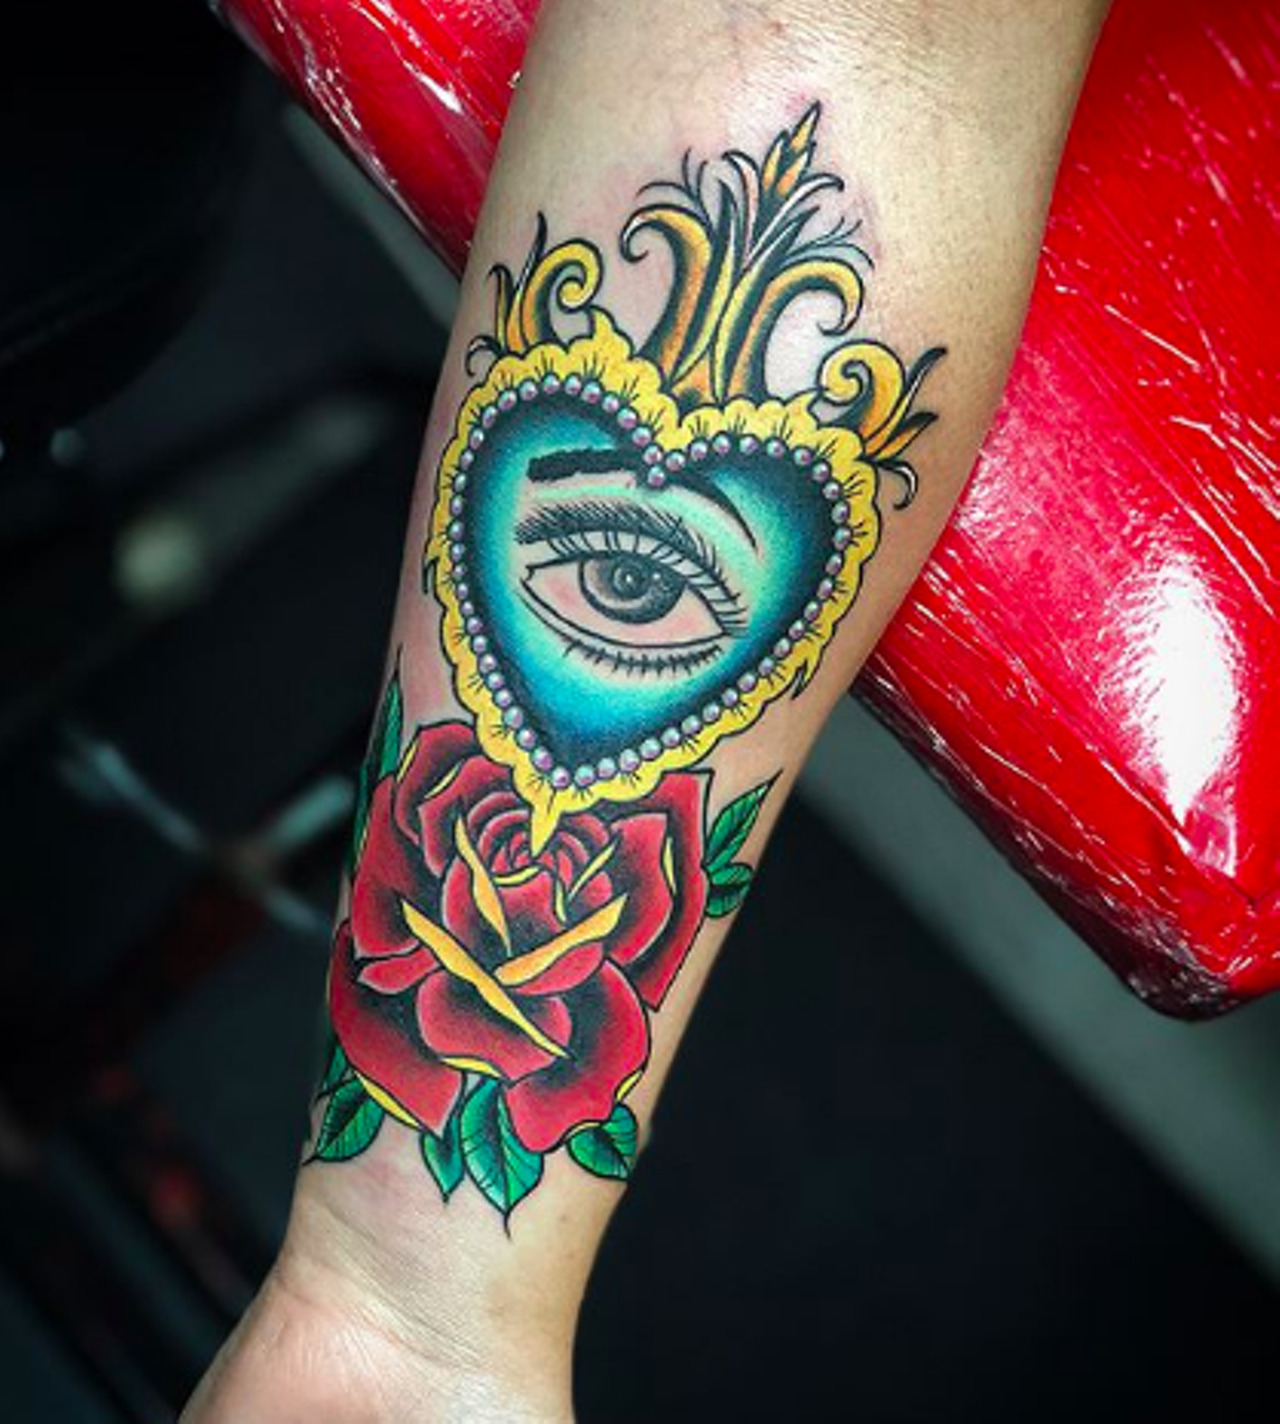 John Lopez / @jlopeztattoos
Aerros Ink Tattoo Studio, 8507 McCullough Ave, (210) 286-5842, aerrosink.com